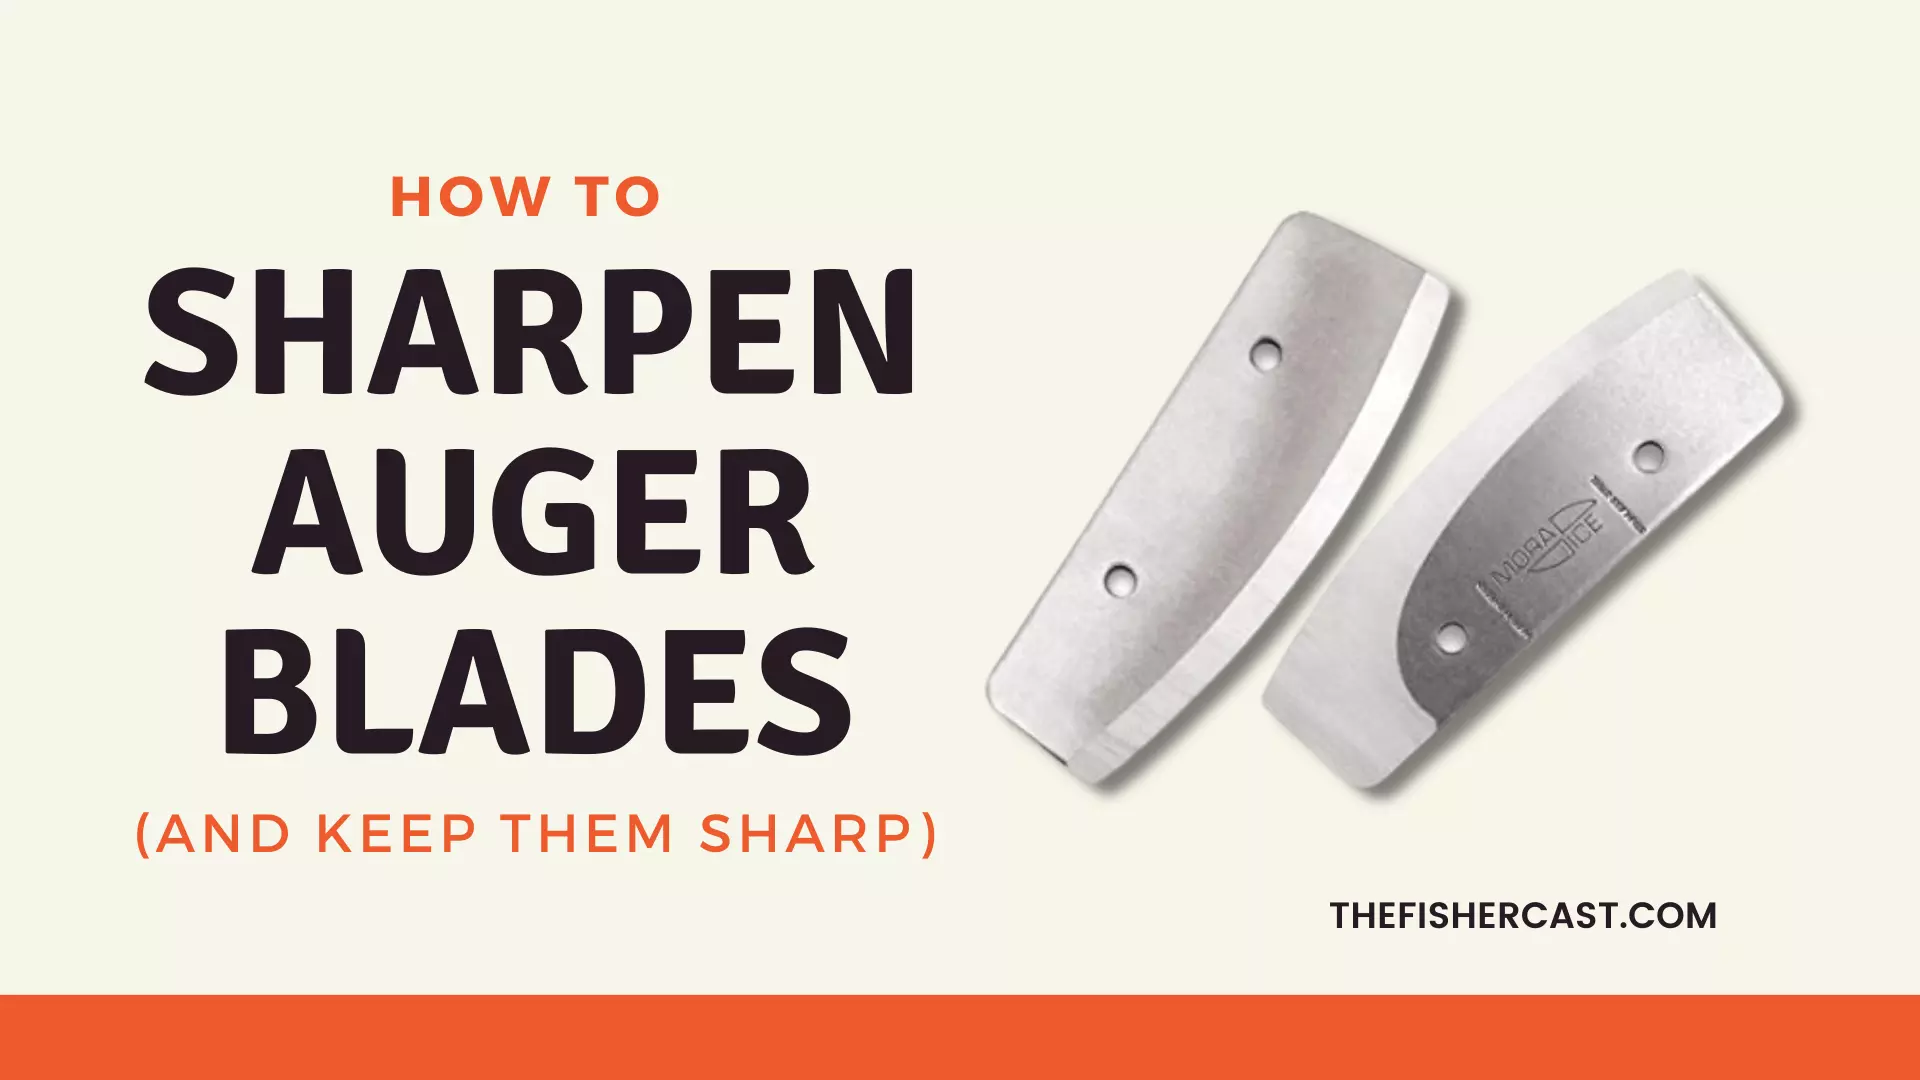 HOW TO SHARPEN AUGER BLADES